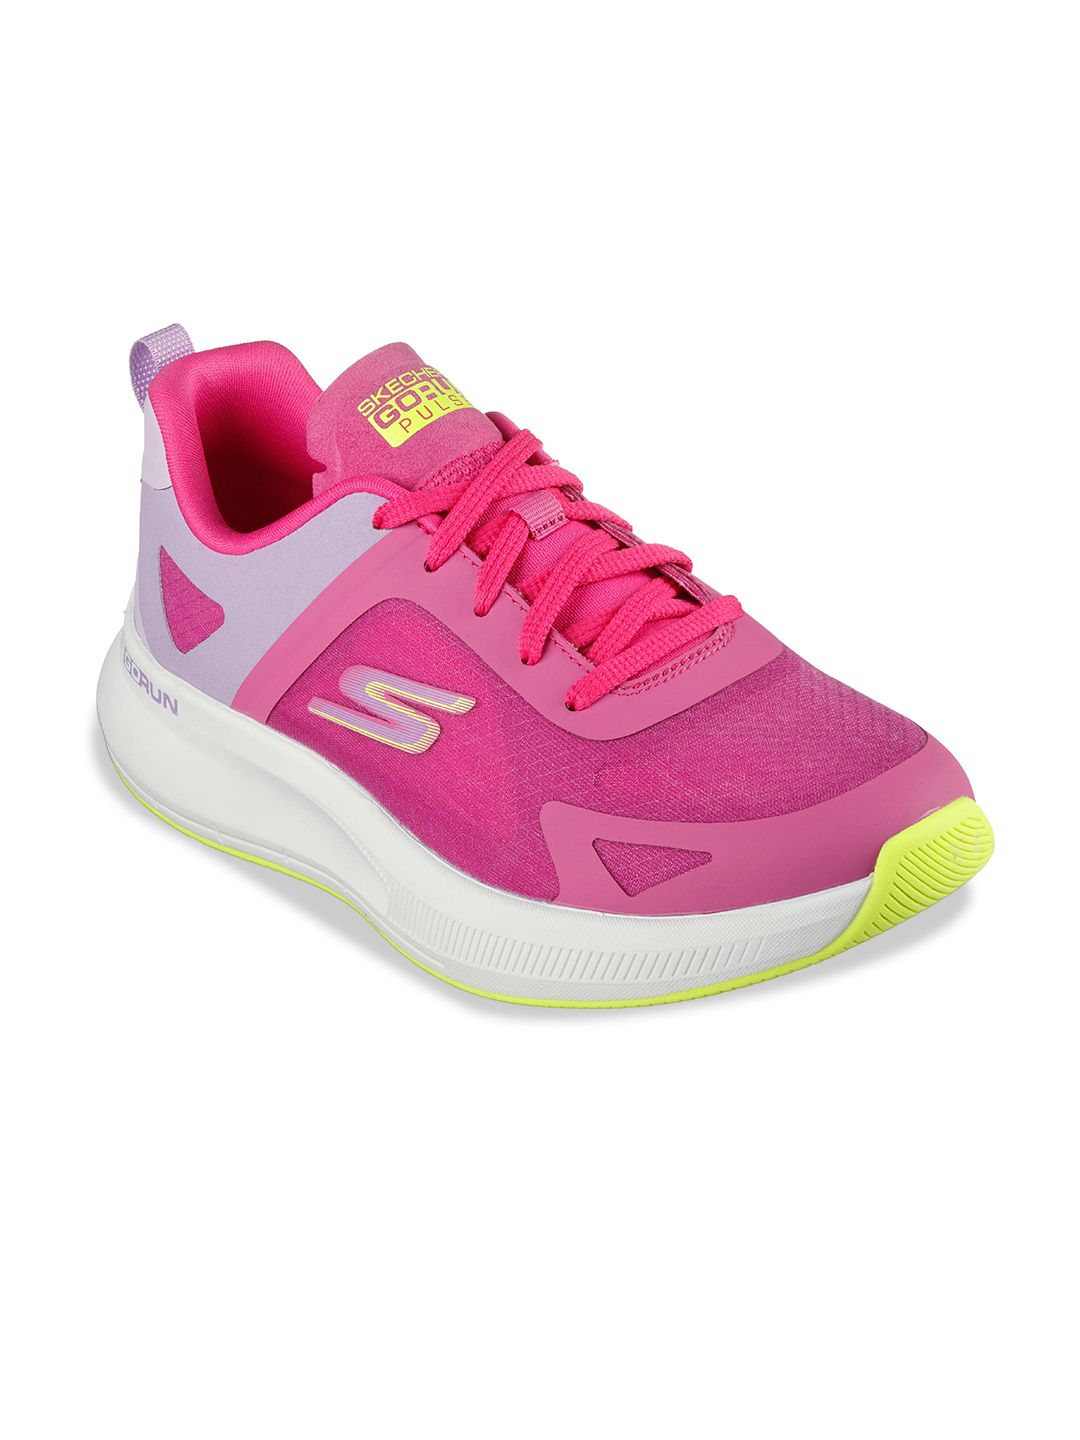 Skechers Women Pink Mesh Running Non-Marking Shoes Price in India